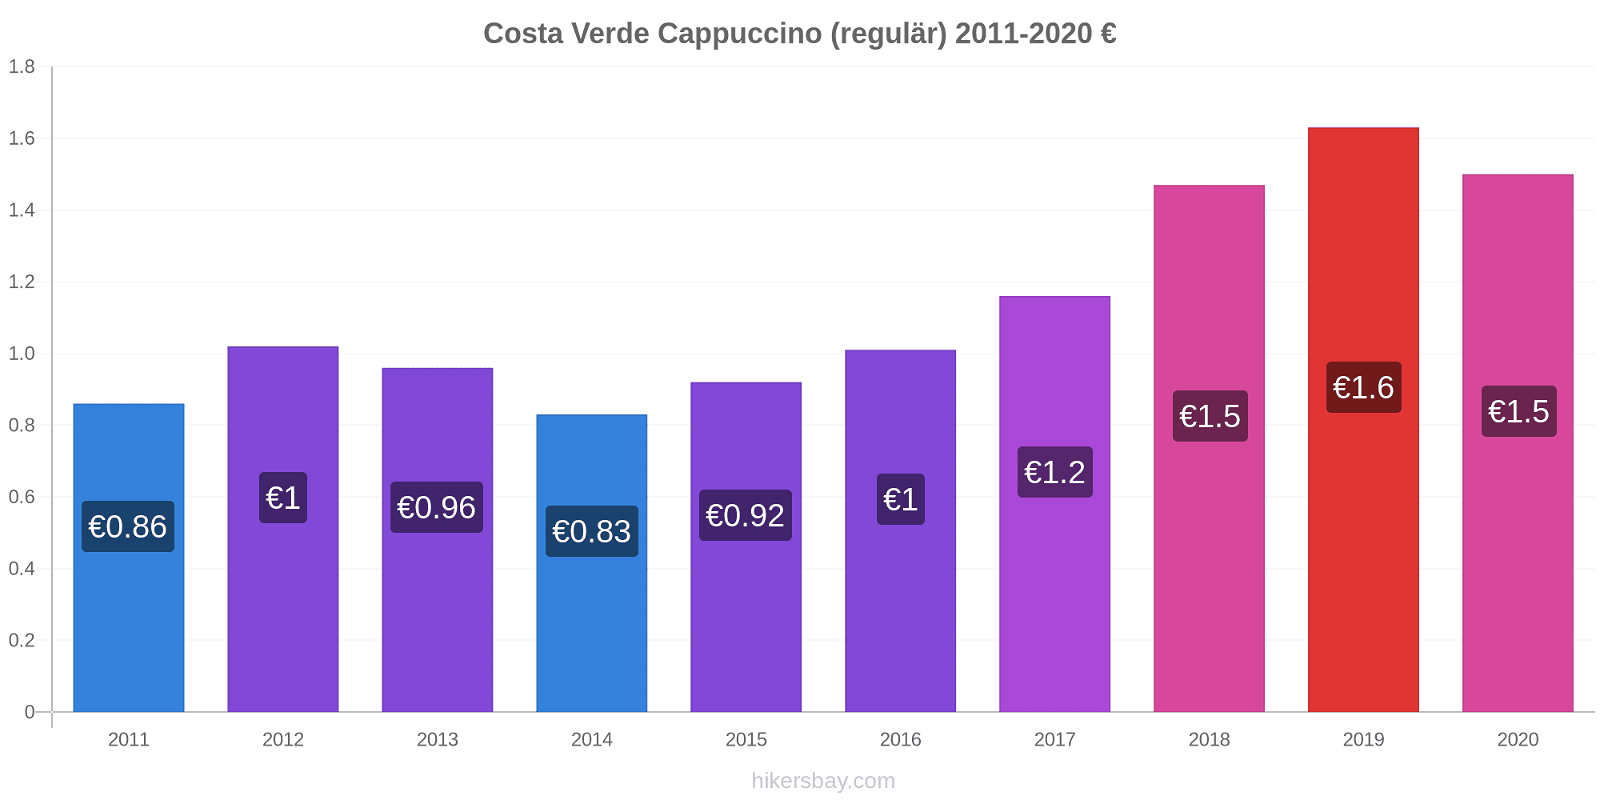 Costa Verde Preisänderungen Cappuccino (regulär) hikersbay.com